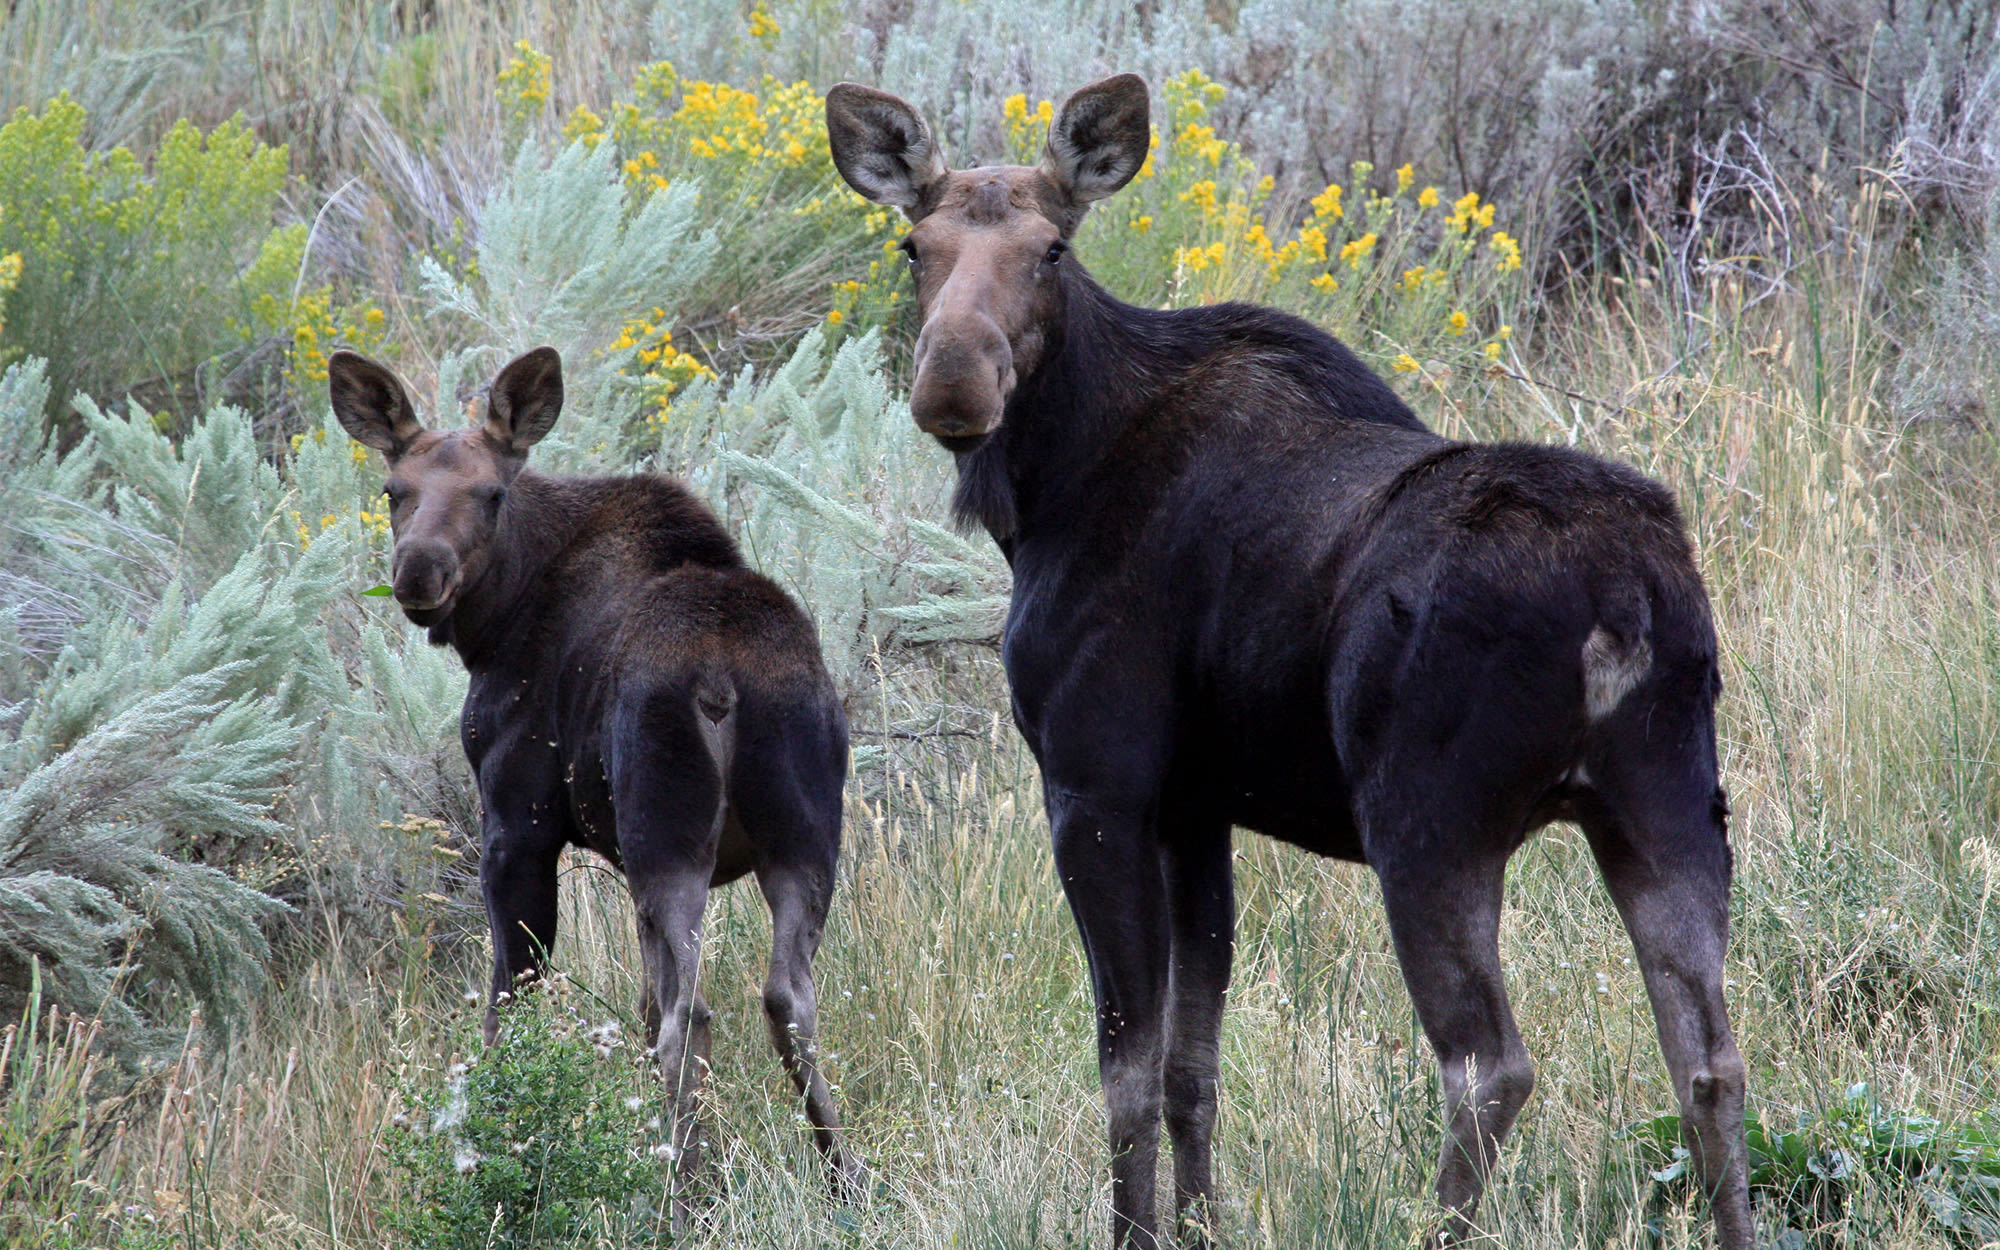 Idaho Turkey Hunter Shoots Charging Cow Moose in Self-Defense